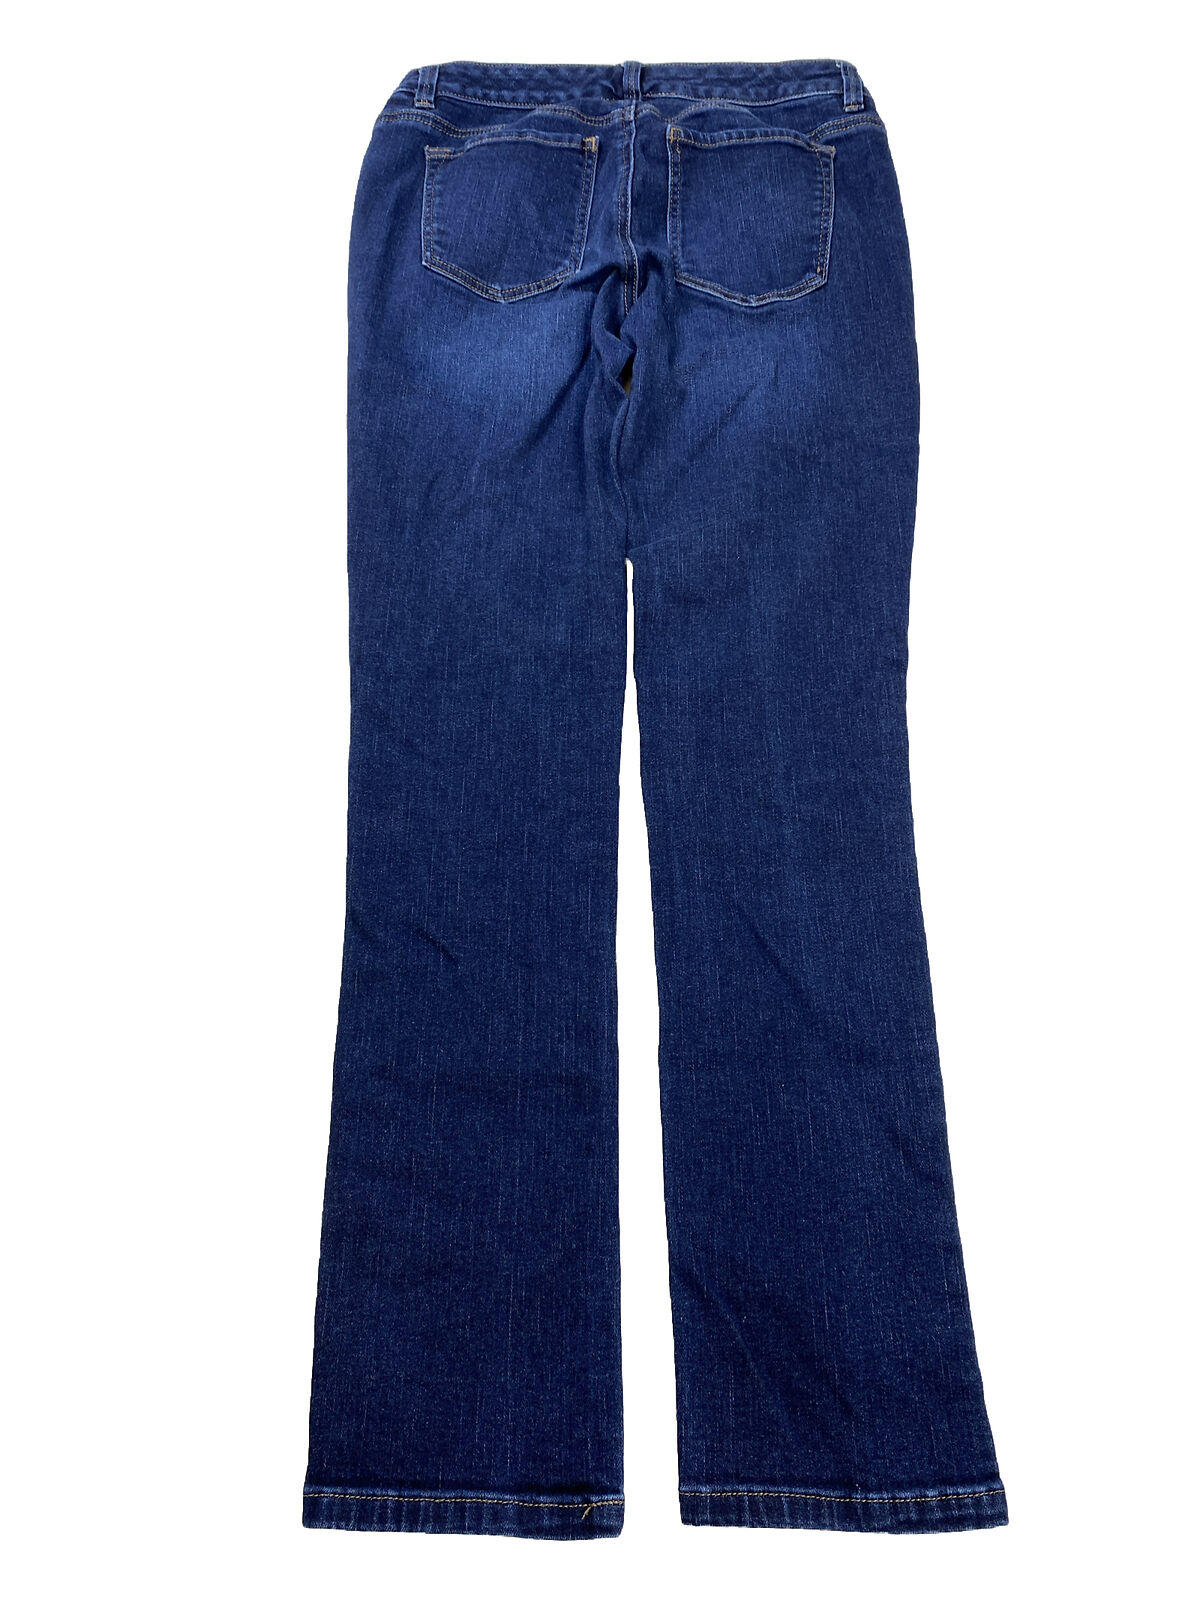 White House Black Market Jeans ajustados con lavado oscuro para mujer - 4 R